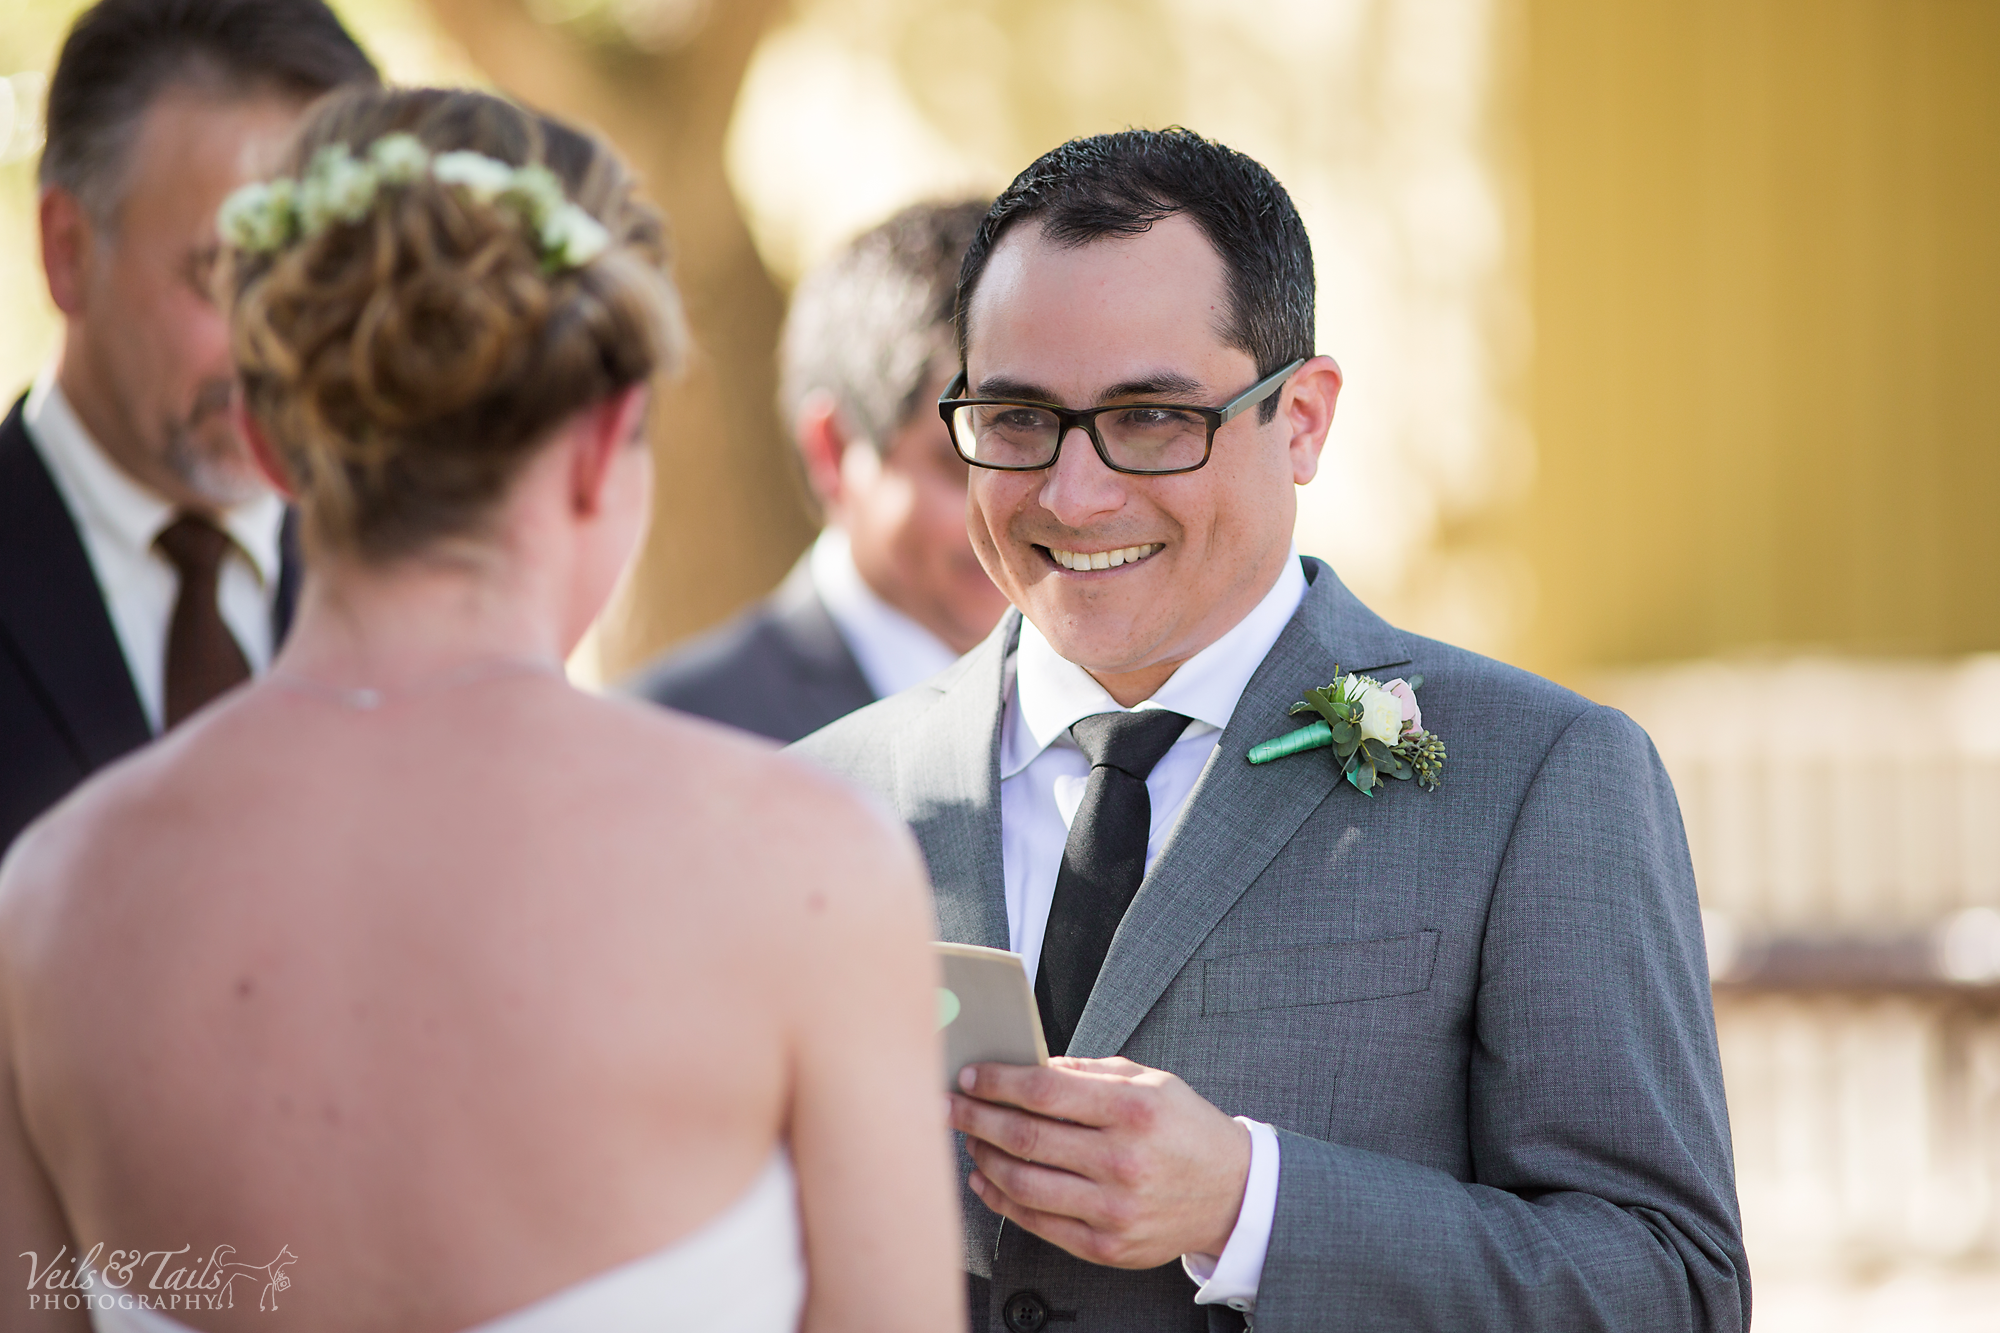 average wedding photographer cost california